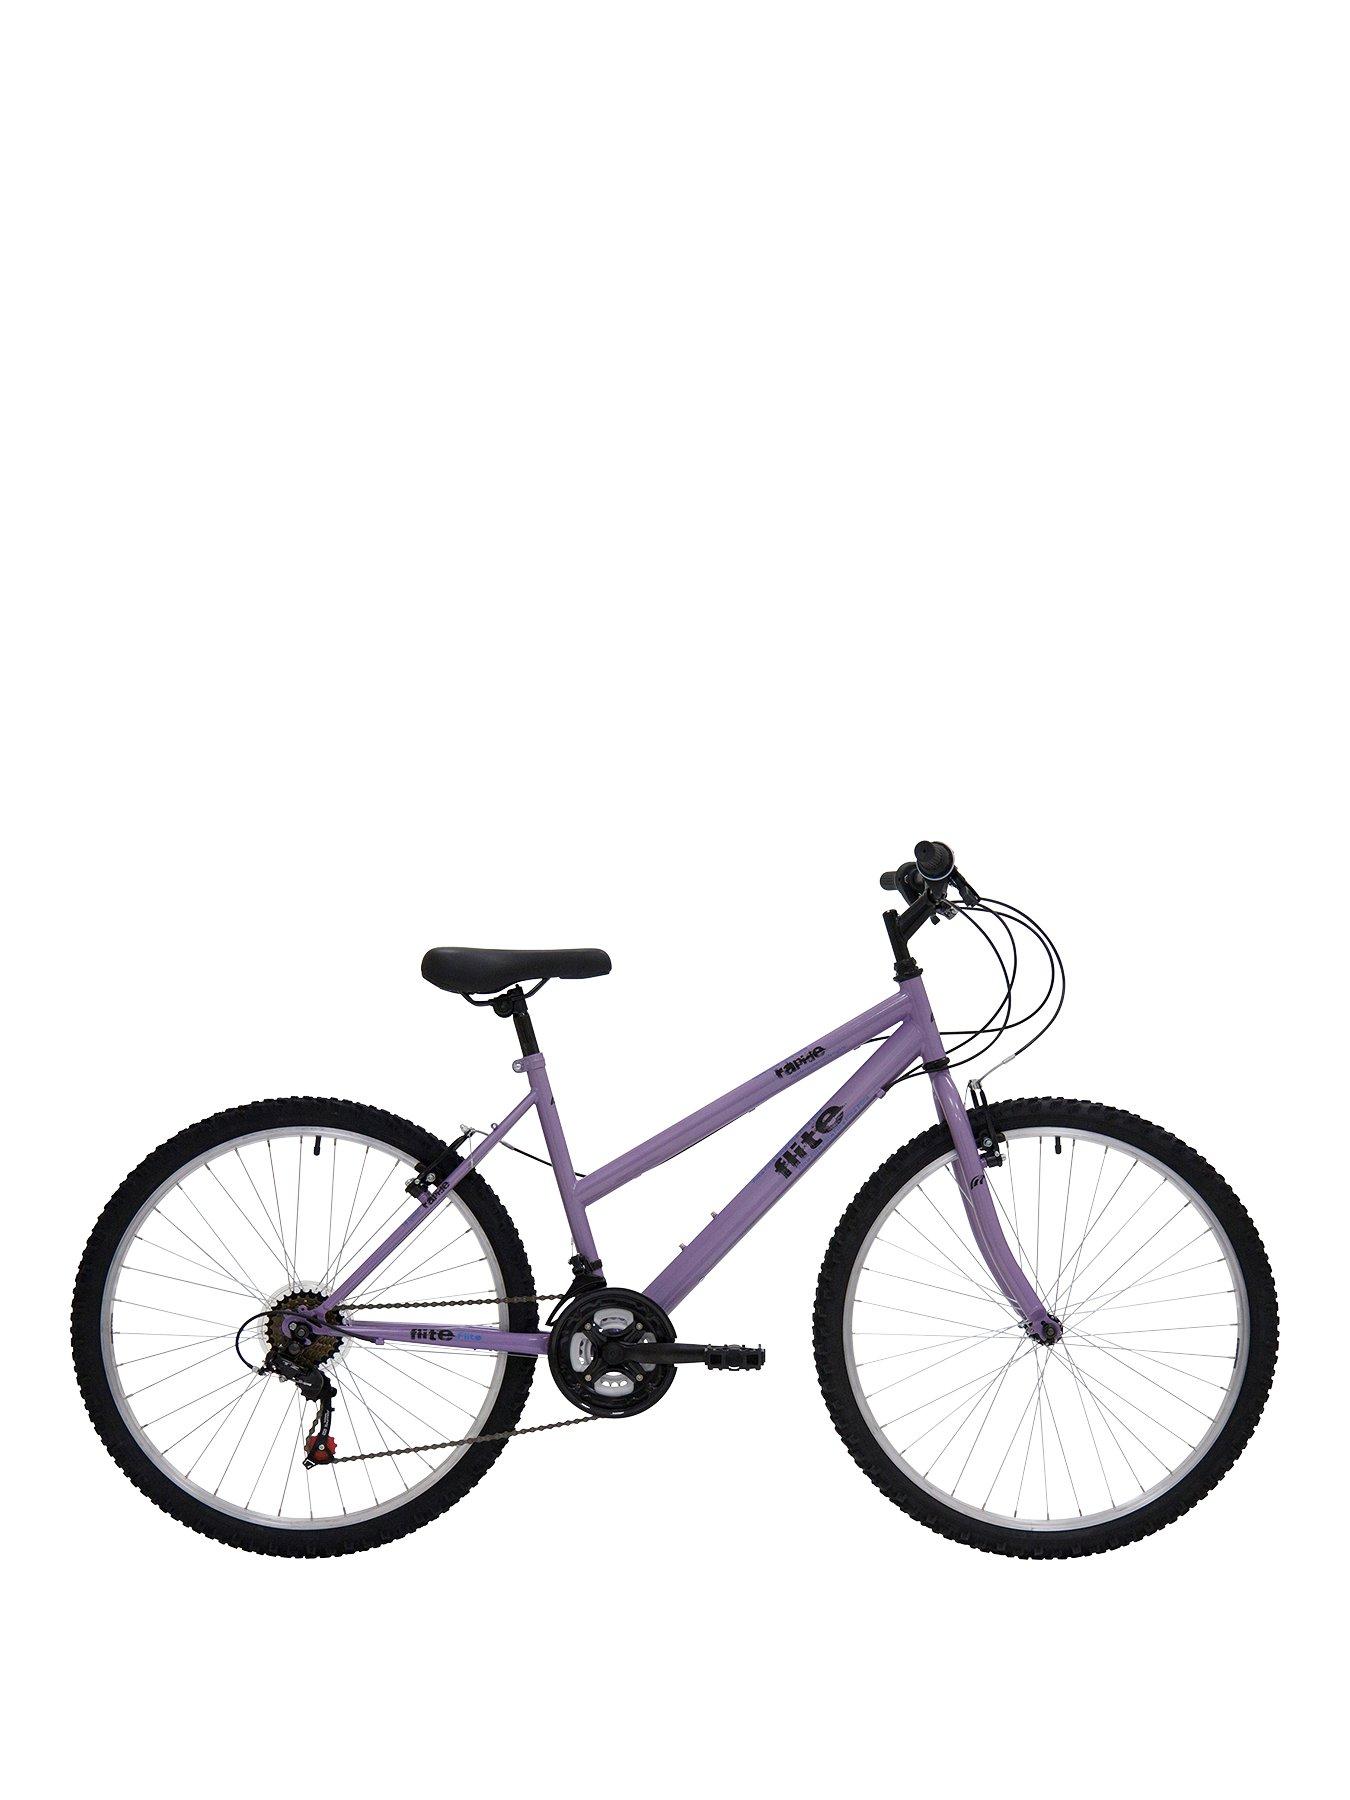 18 inch ladies bike